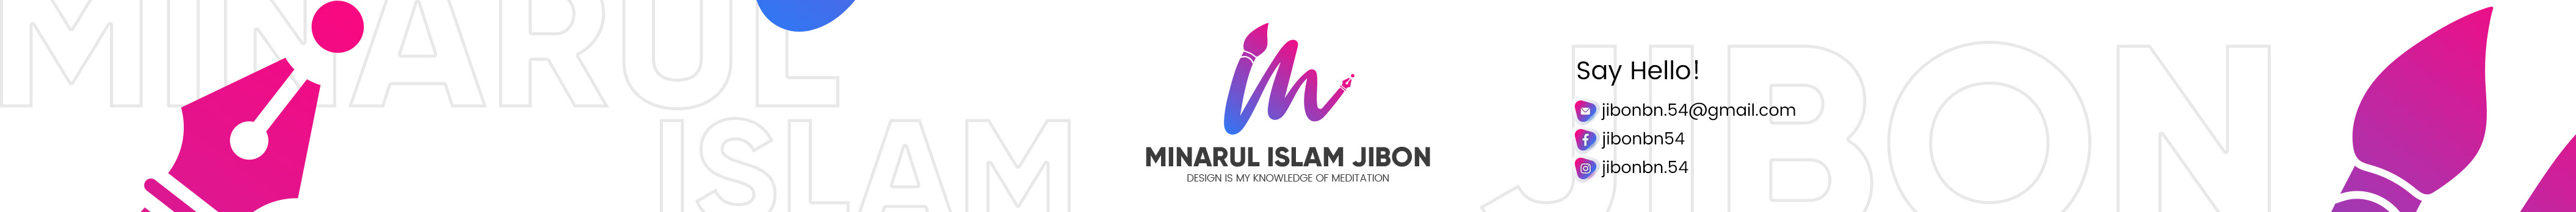 Profil-Banner von Minarul Islam Jibon